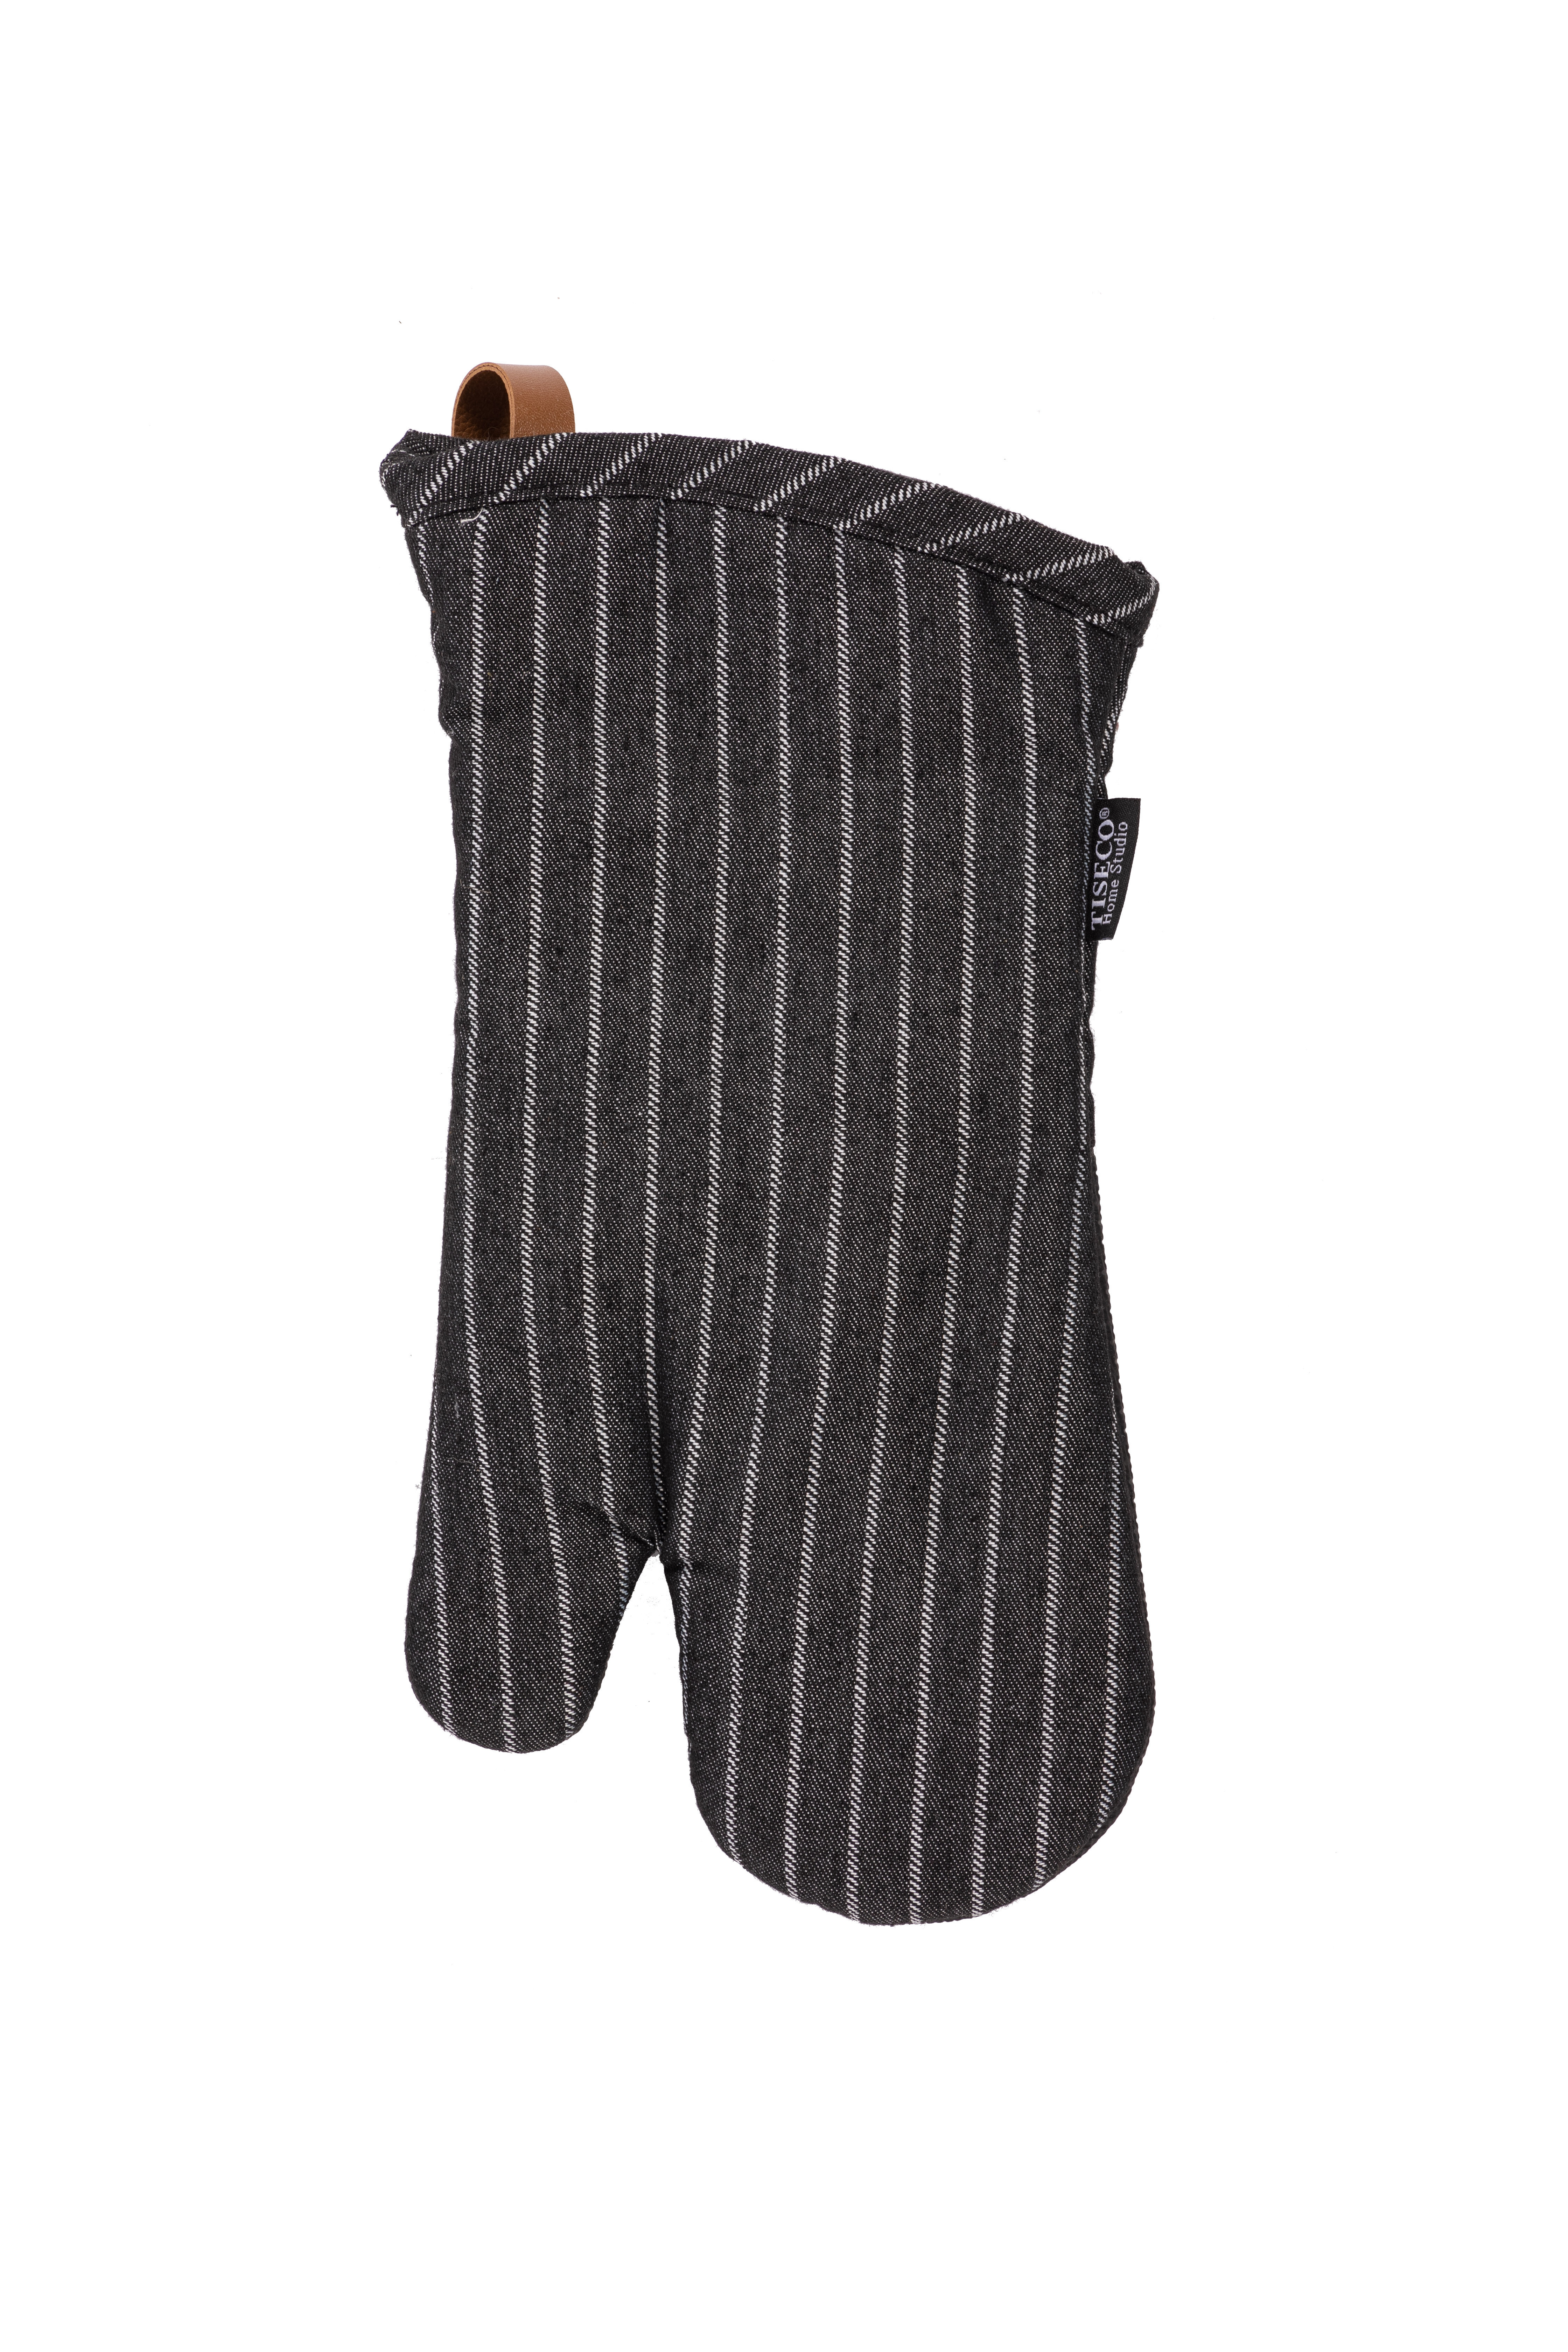 Gant de cuisine (1R + 1L) SHERLOCK Stripe, 17x33cm, noir